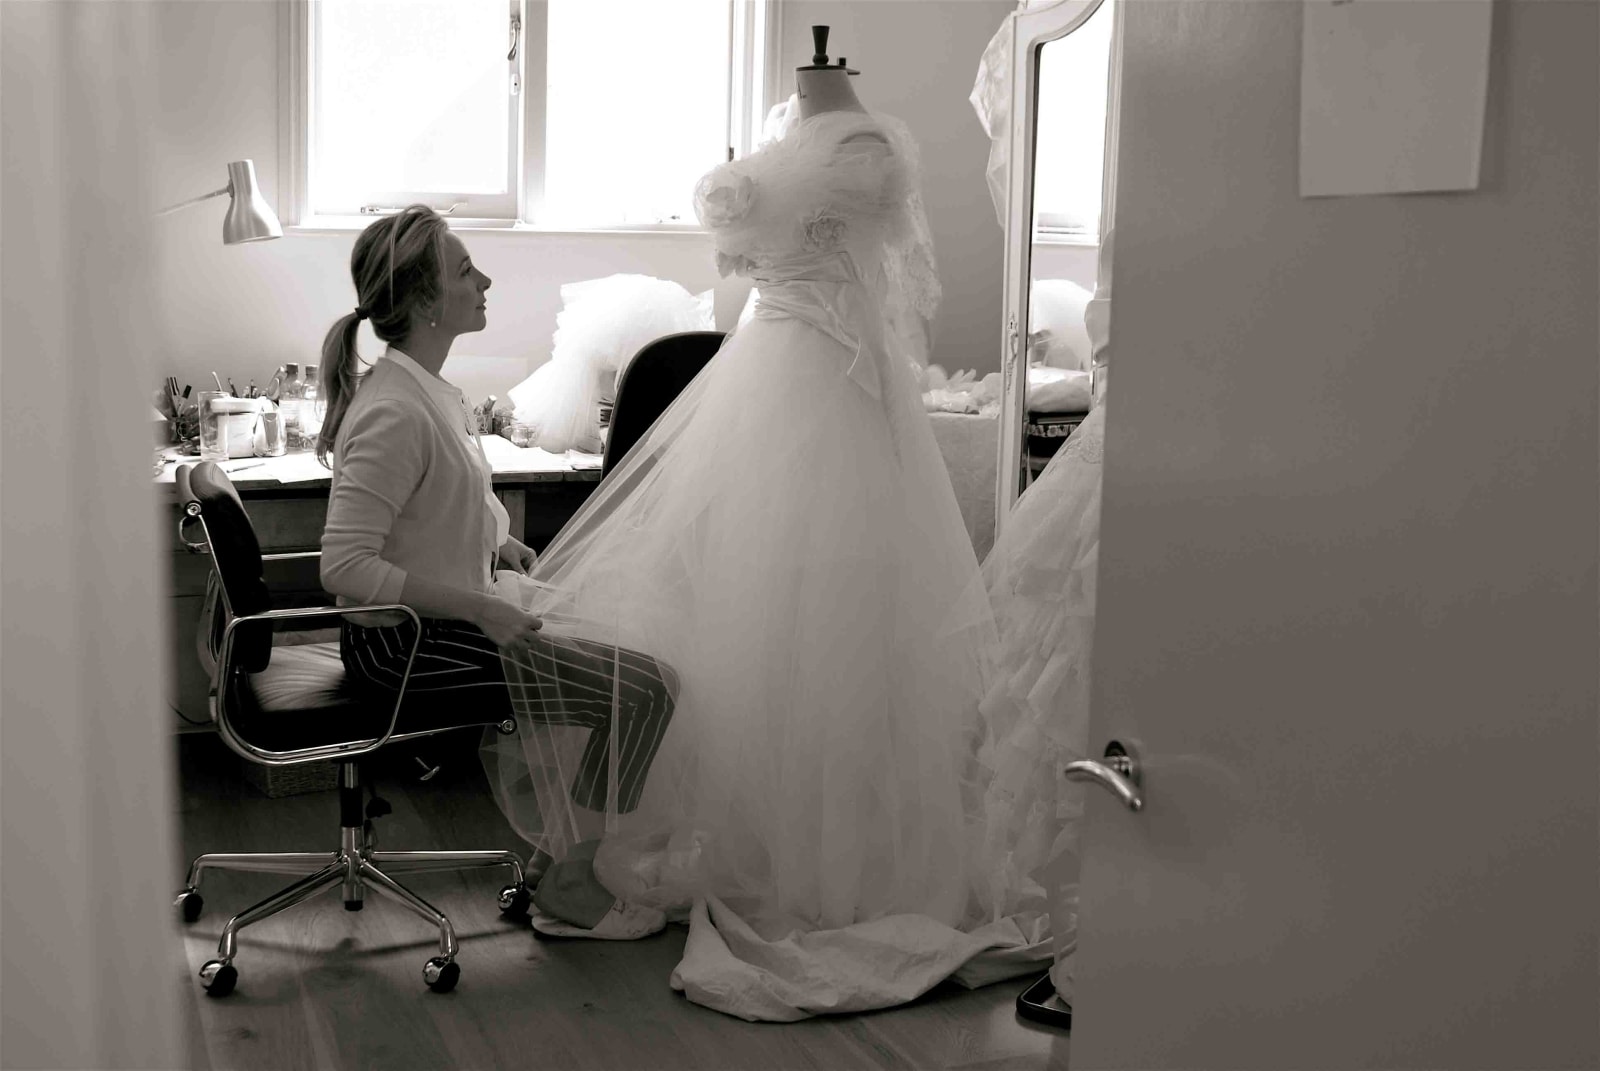 bridebook.co.uk phillipa lepley at work on a dress in her studio